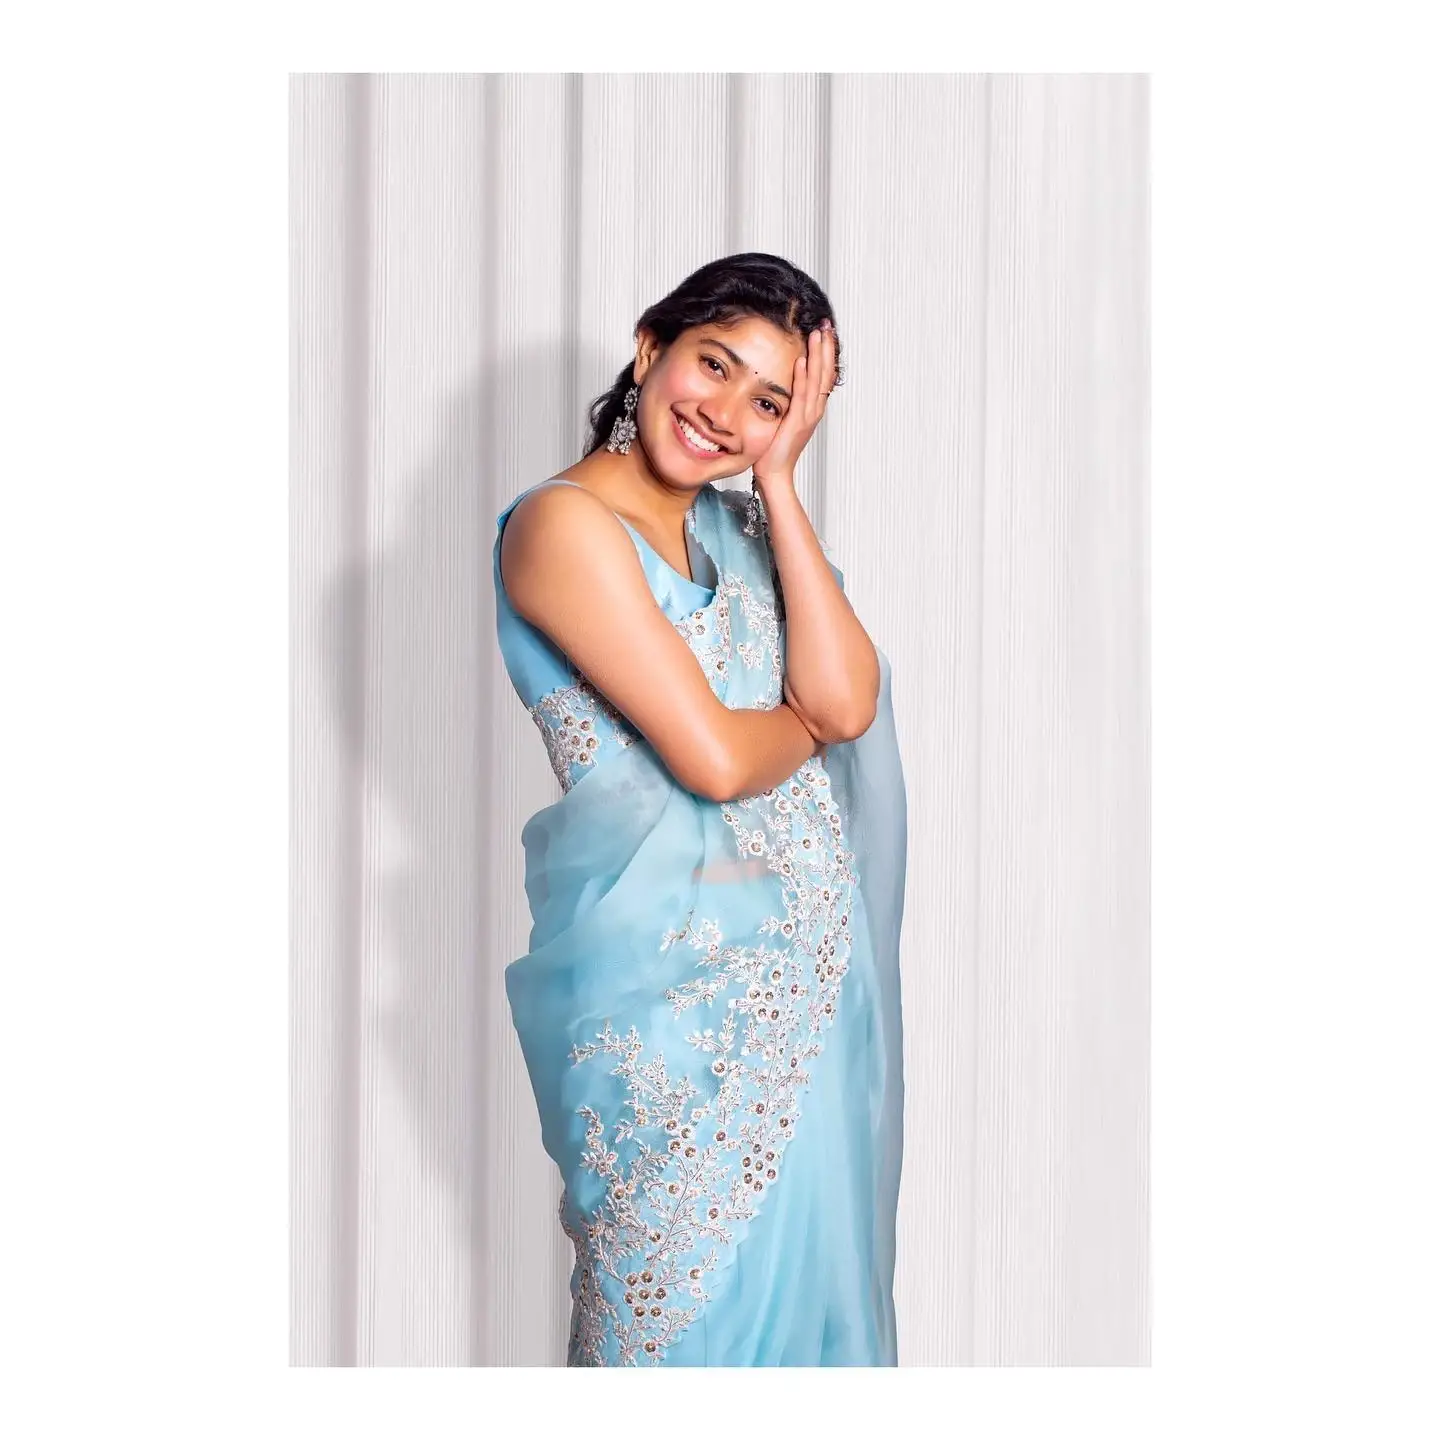 INDIAN GIRL SAI PALLAVI LONG HAIR IN SLEEVELESS BLUE SAREE 6